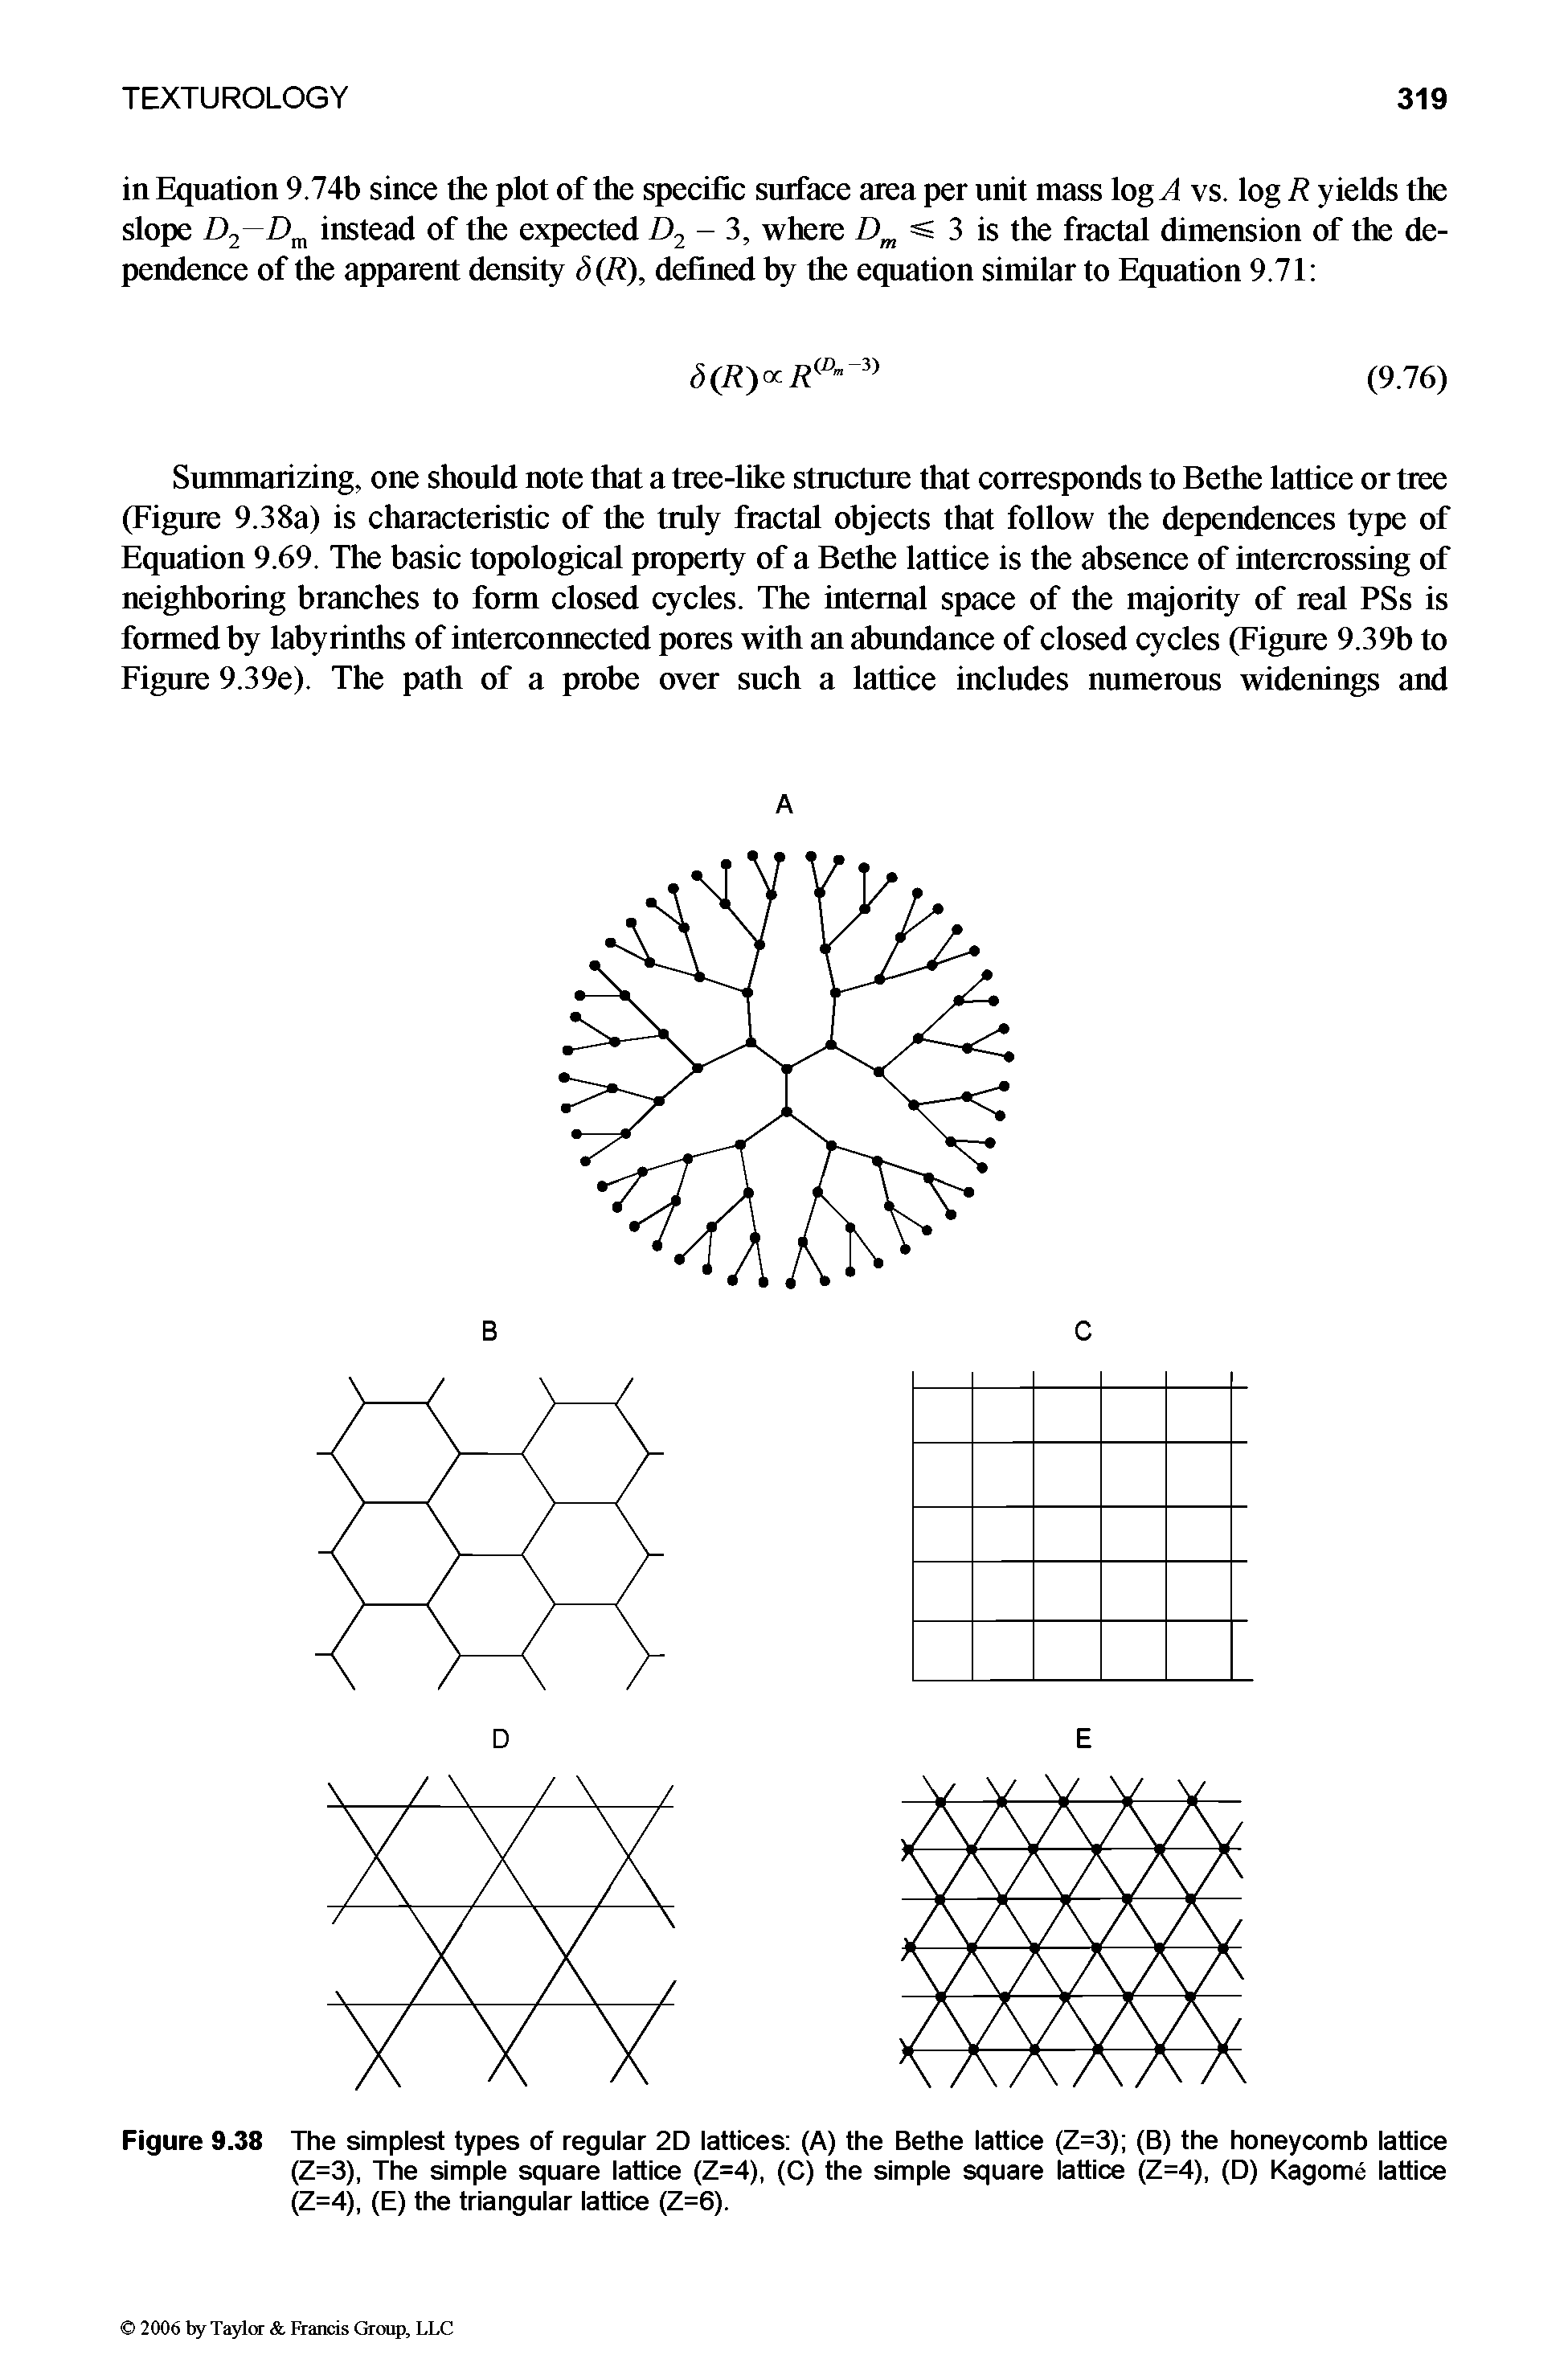 Figure 9.38 The simplest types of regular 2D lattices (A) the Bethe lattice (Z=3) (B) the honeycomb lattice (Z=3), The simple square lattice (Z=4), (C) the simple square lattice (Z=4), (D) Kagome lattice (Z=4), (E) the triangular lattice (Z=6).